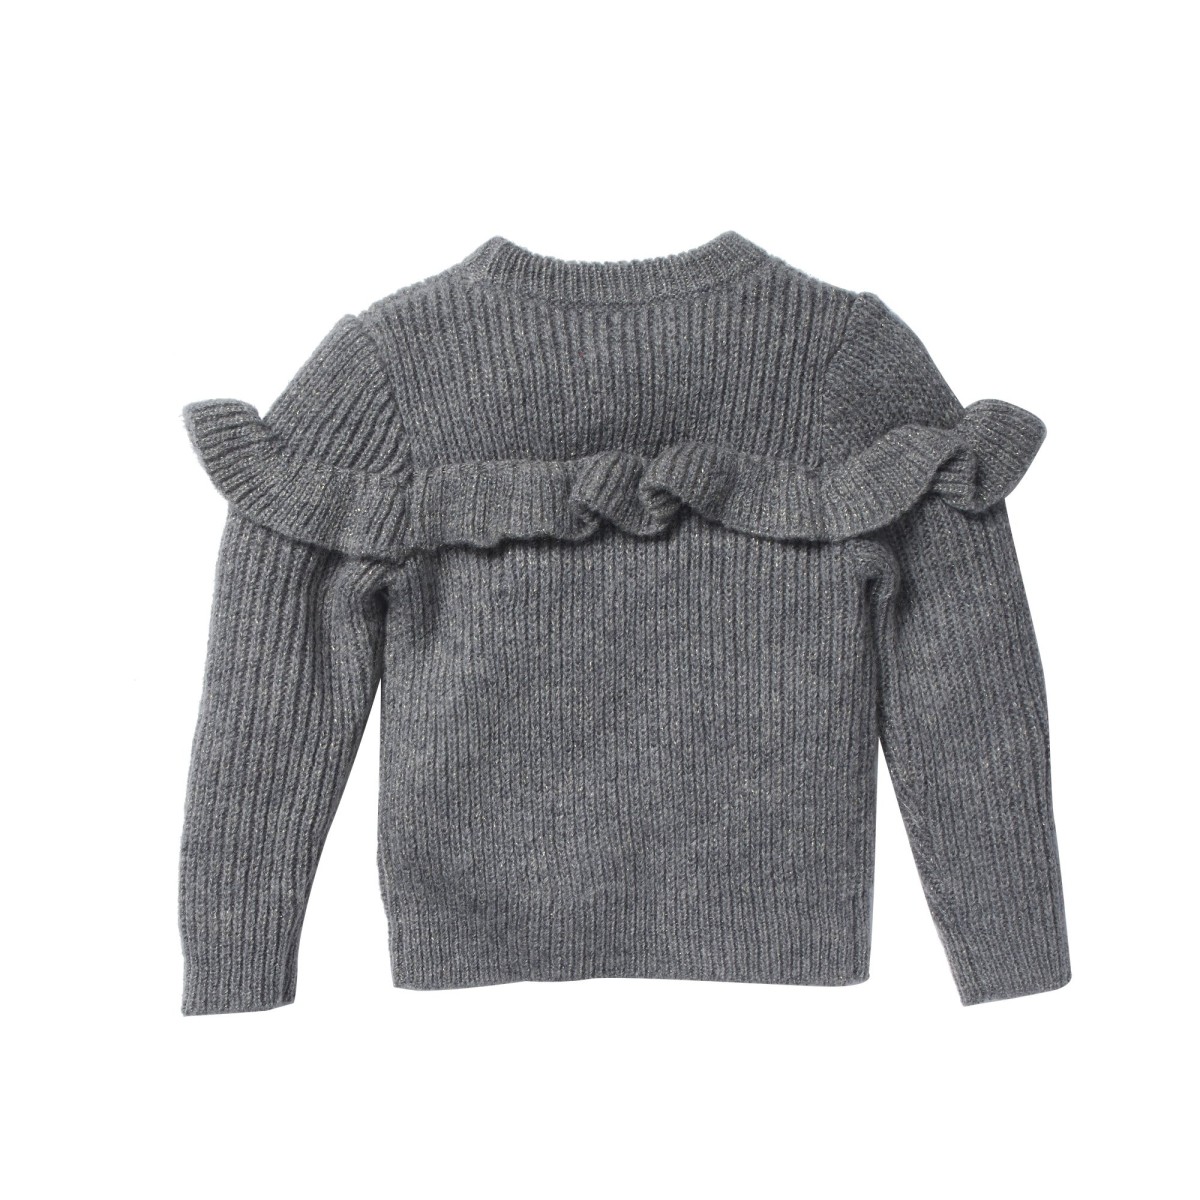 Ribbed sweater Misty grey